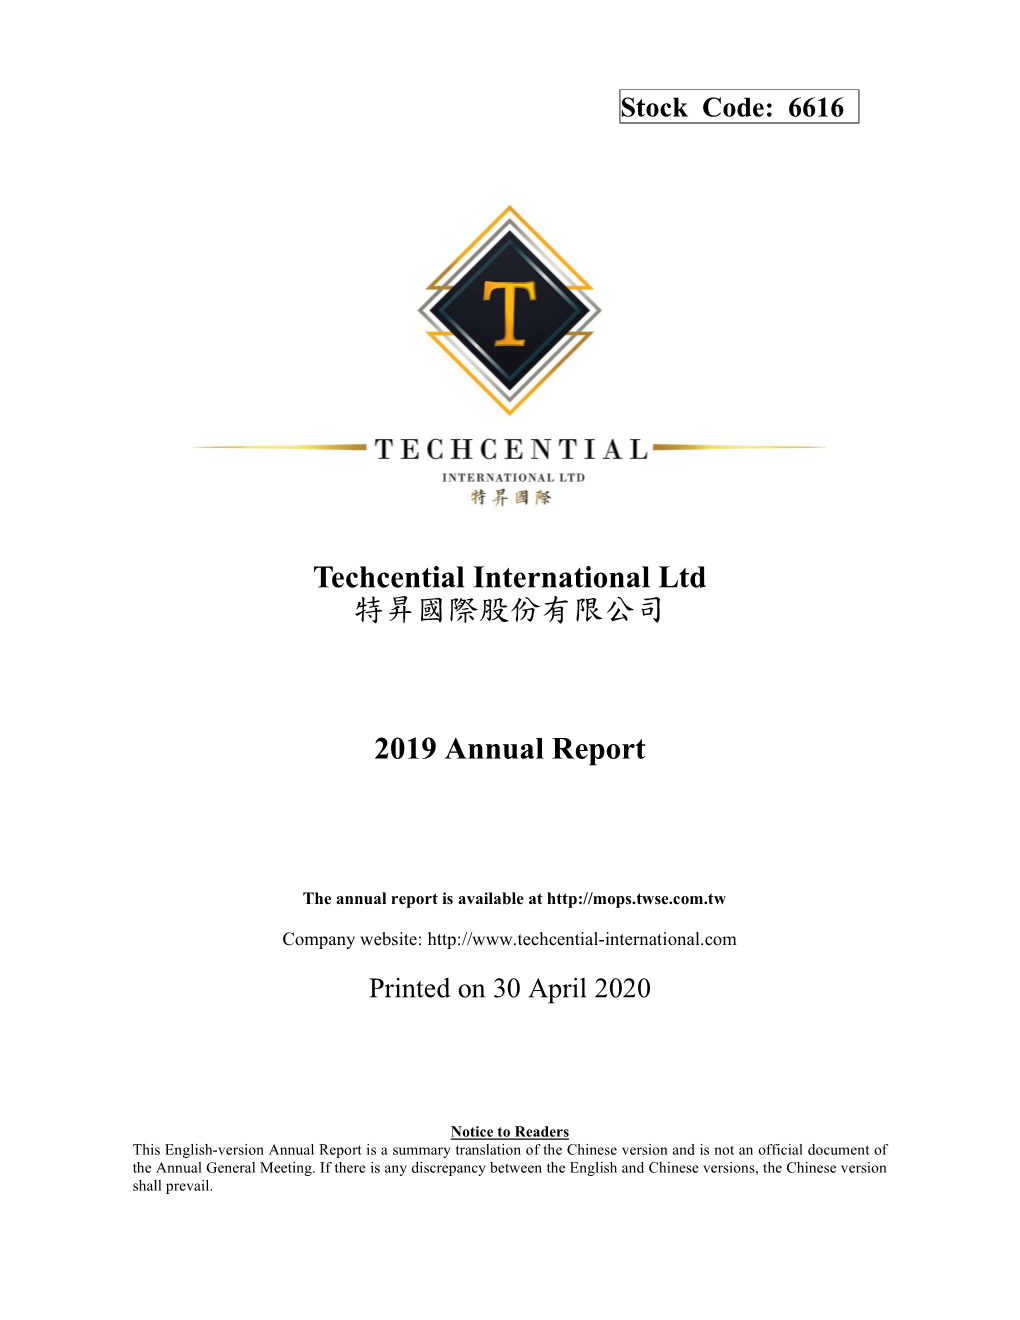 Techcential International Ltd 特昇國際股份有限公司 2019 Annual Report